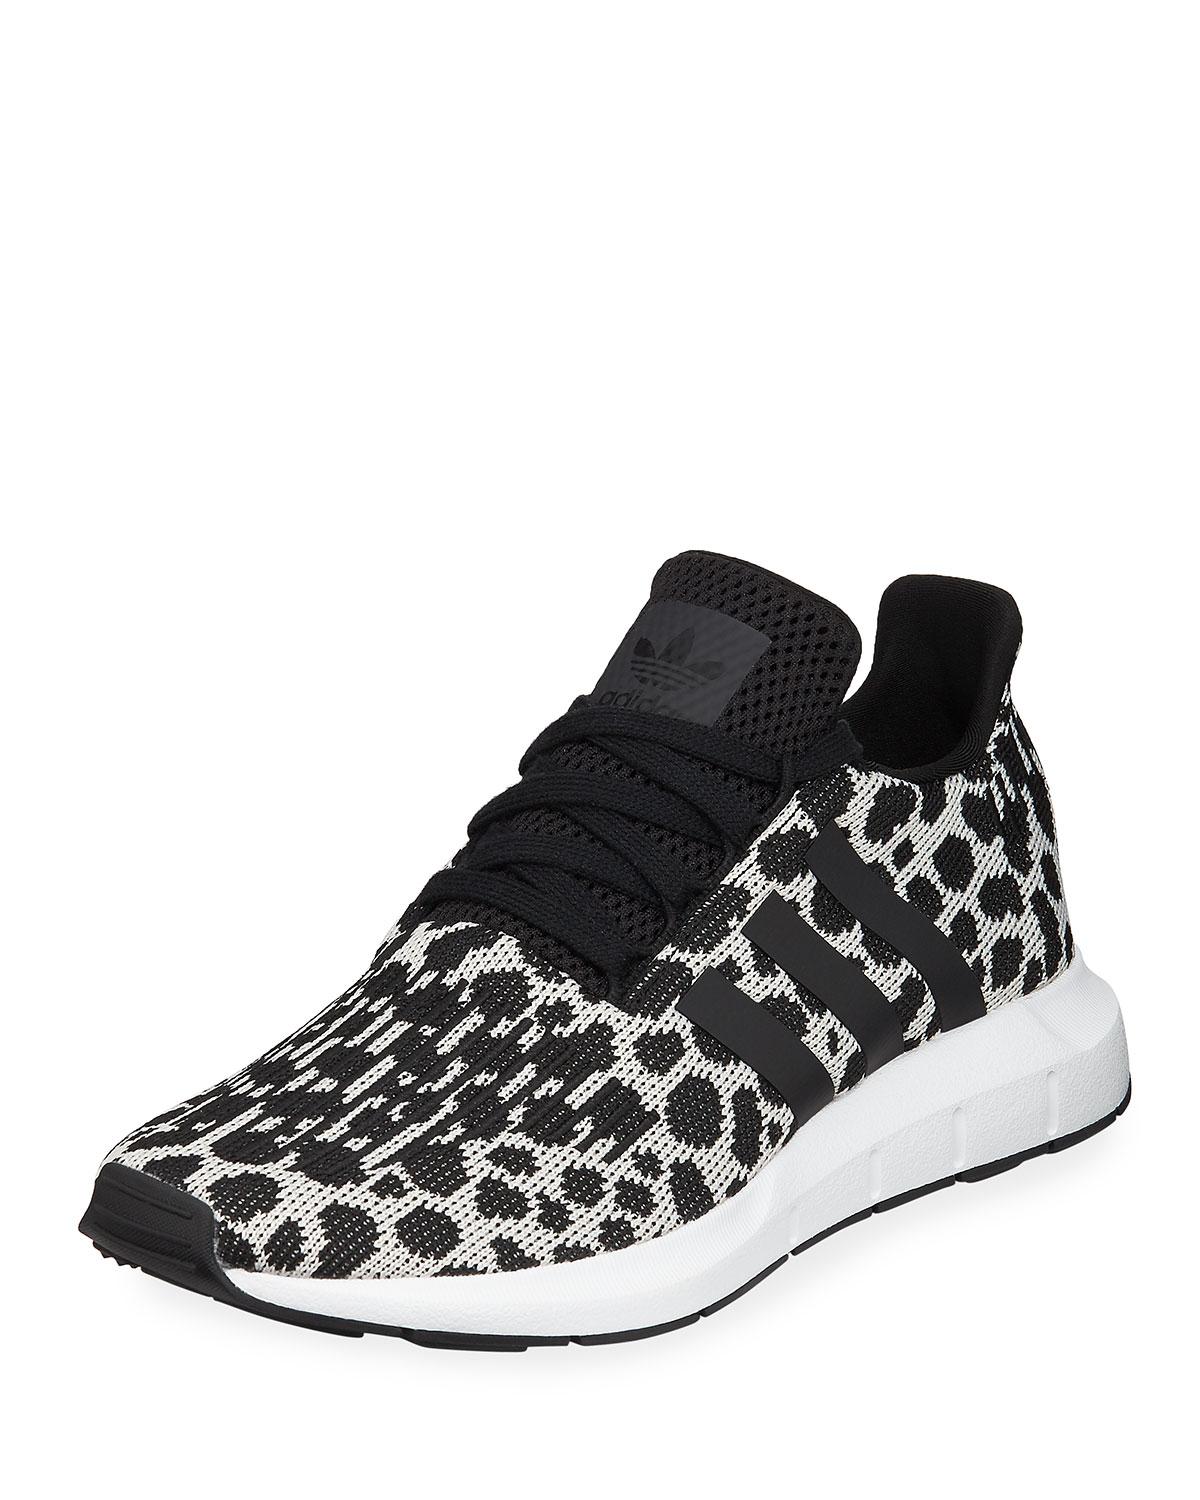 adidas swift run black & white womens shoes leopard